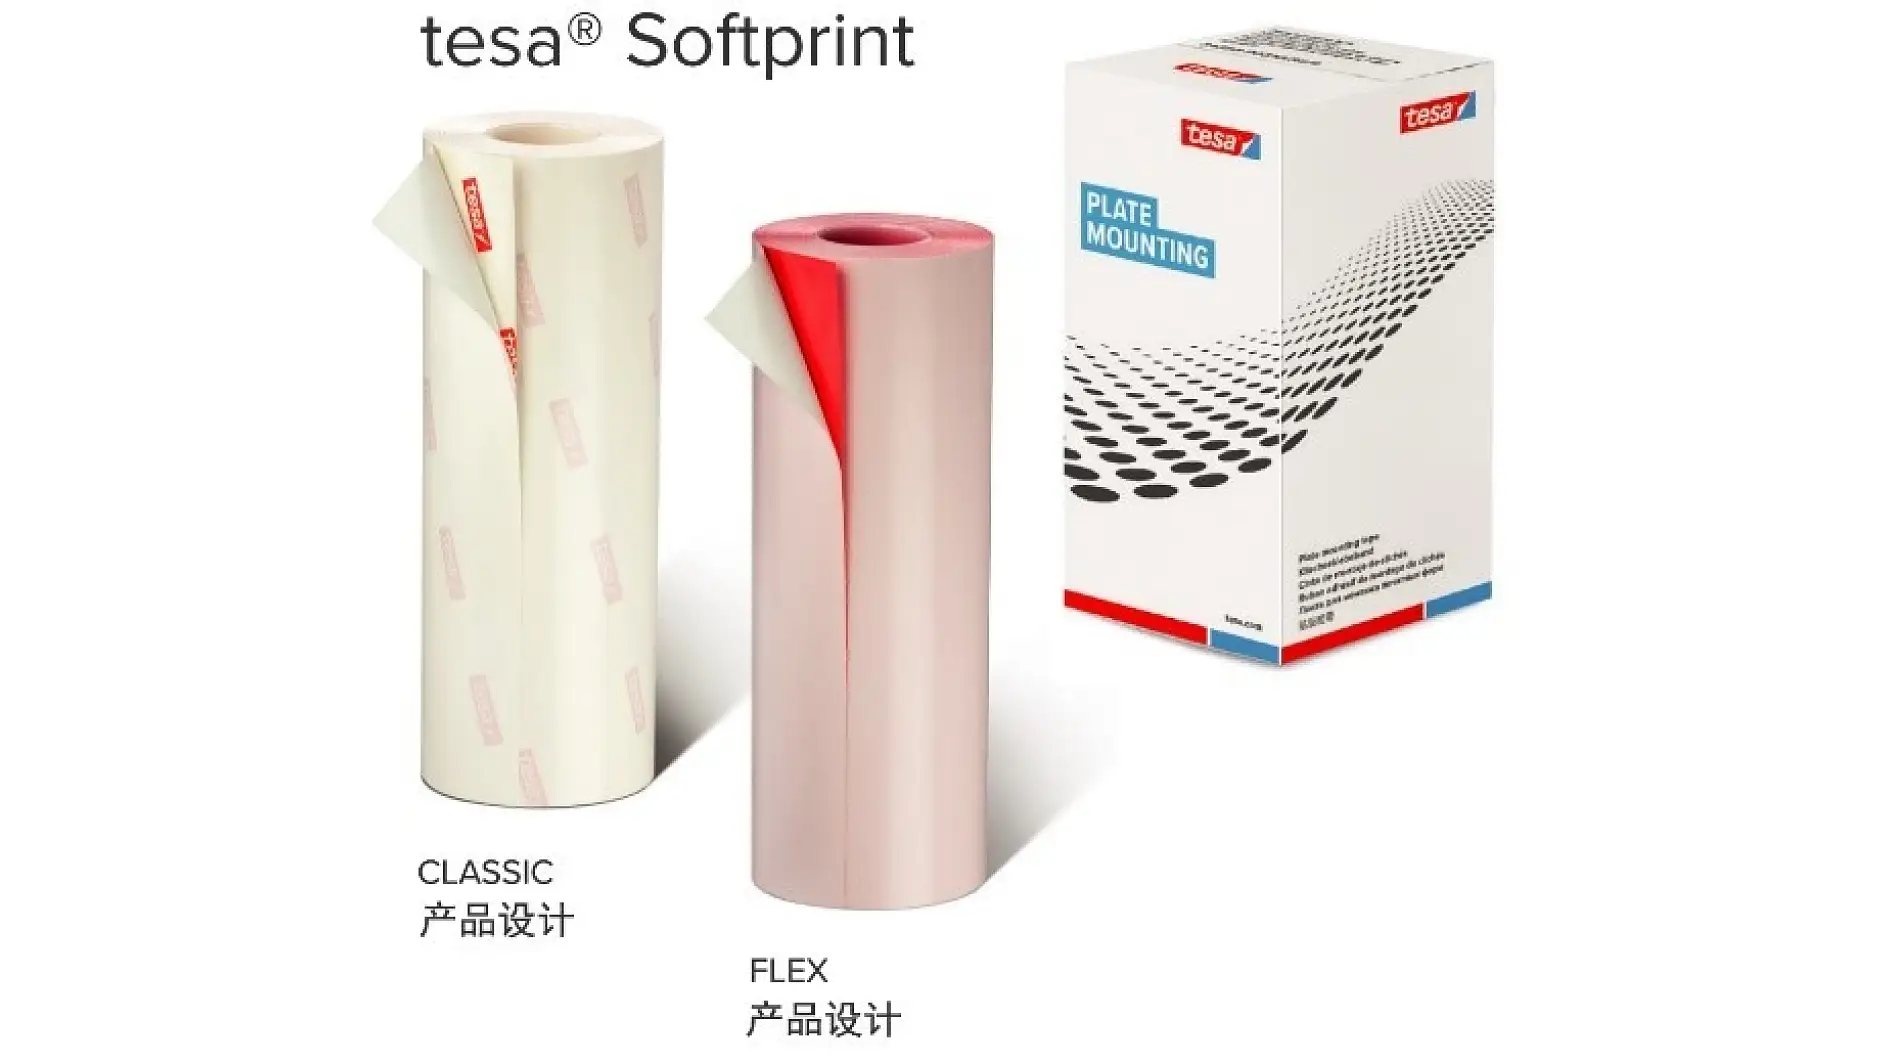 tesa Softprint®product series